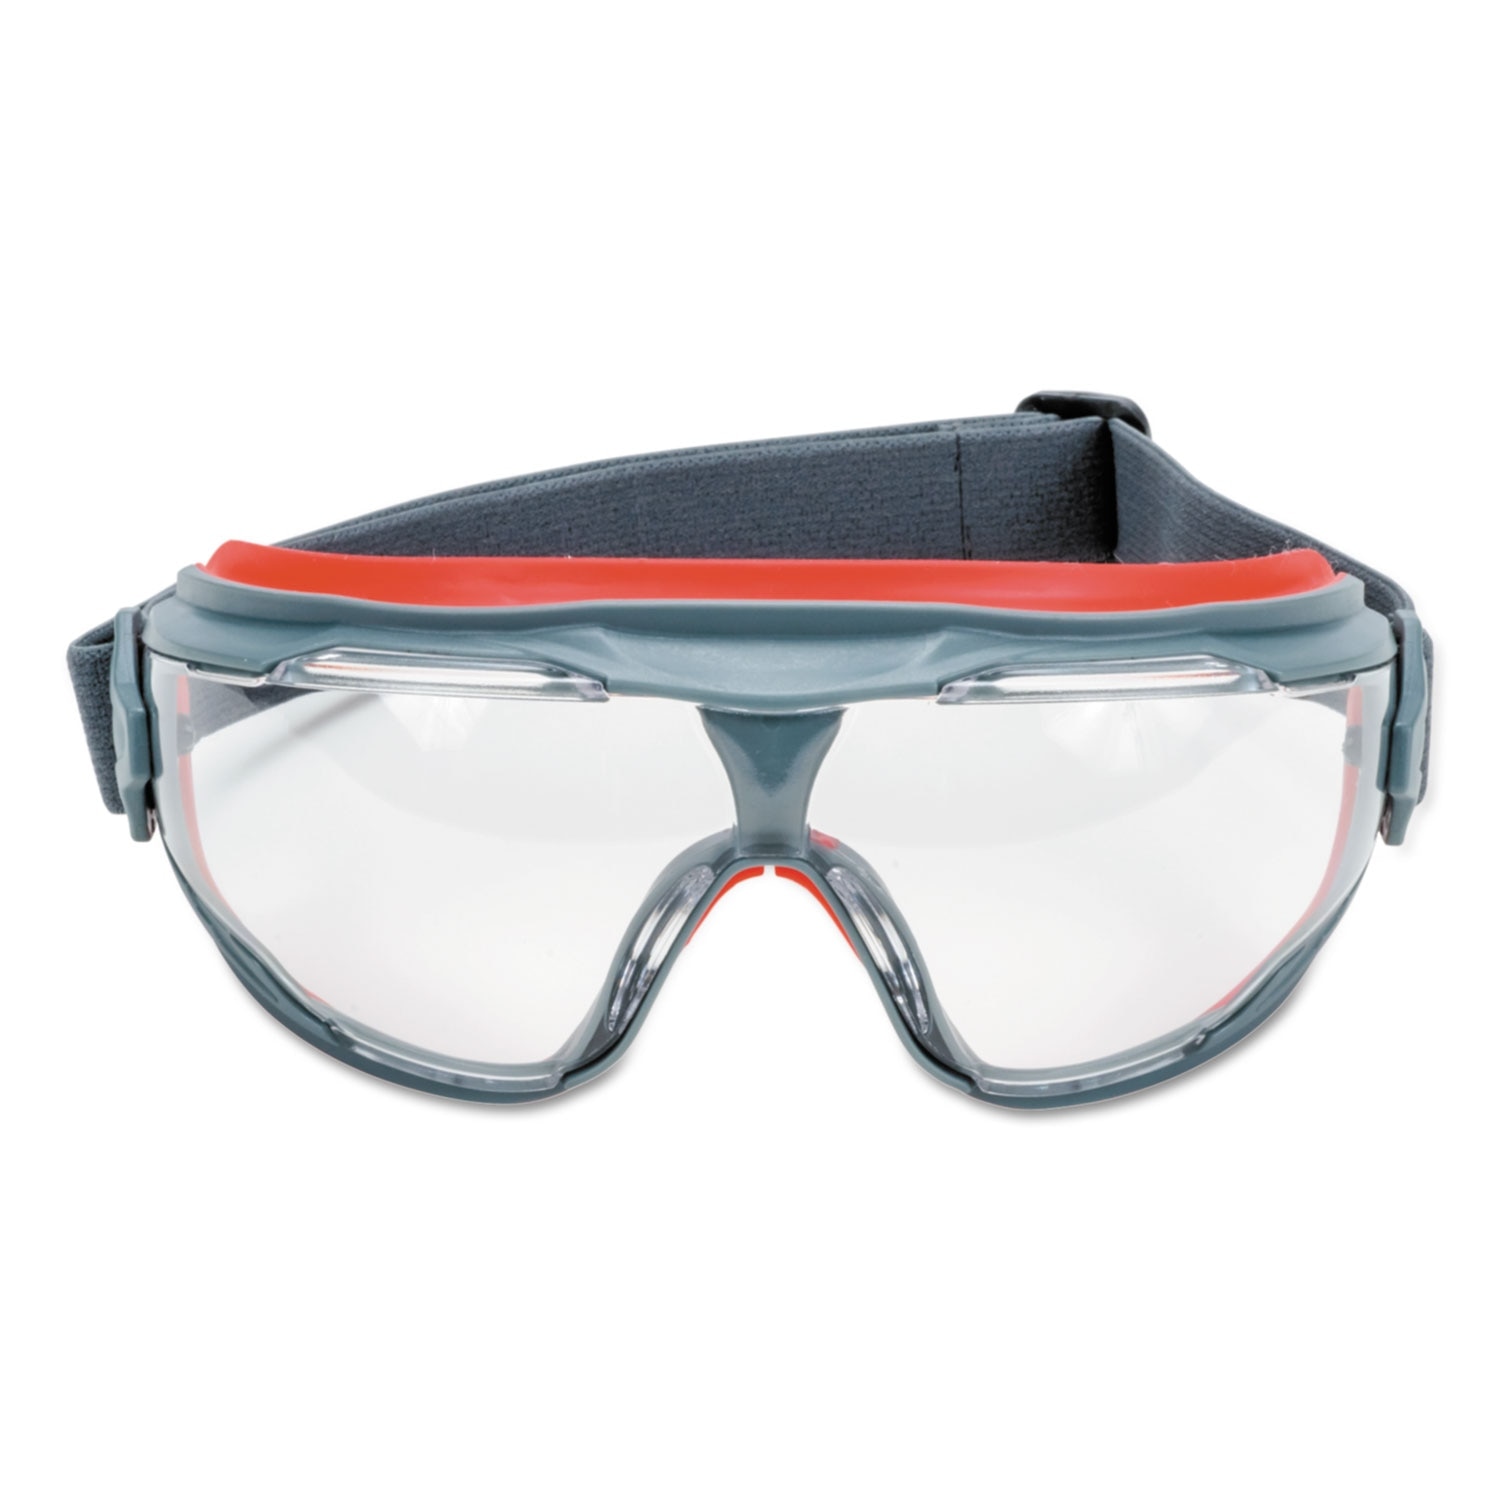 NEW Safety Goggles Antifog w//Scotchgard